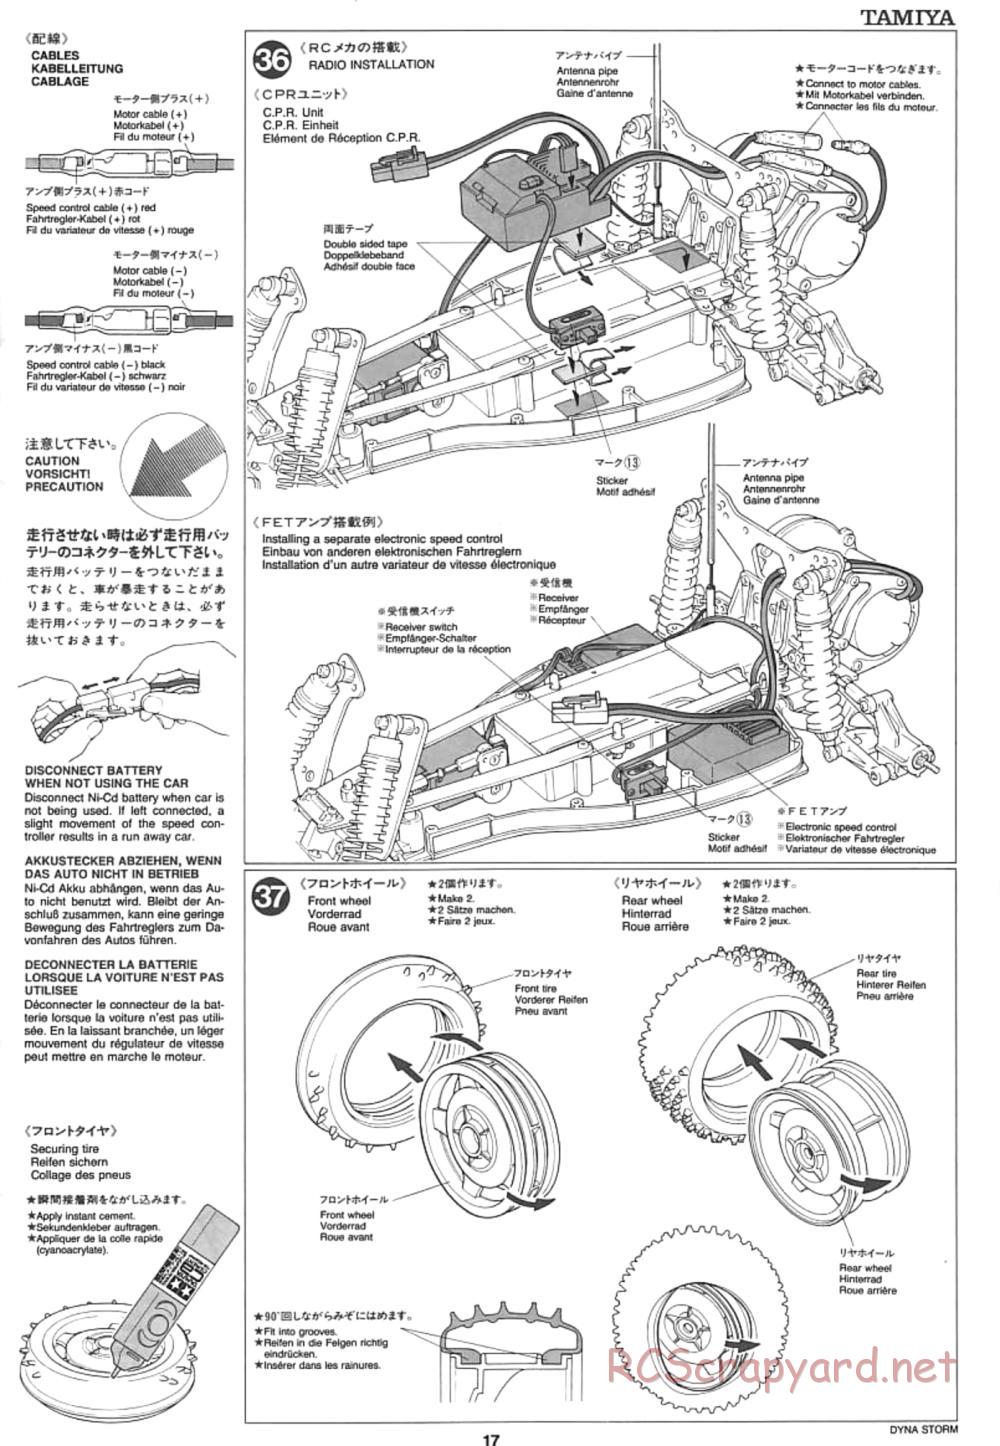 Tamiya - Dyna Storm Chassis - Manual - Page 17